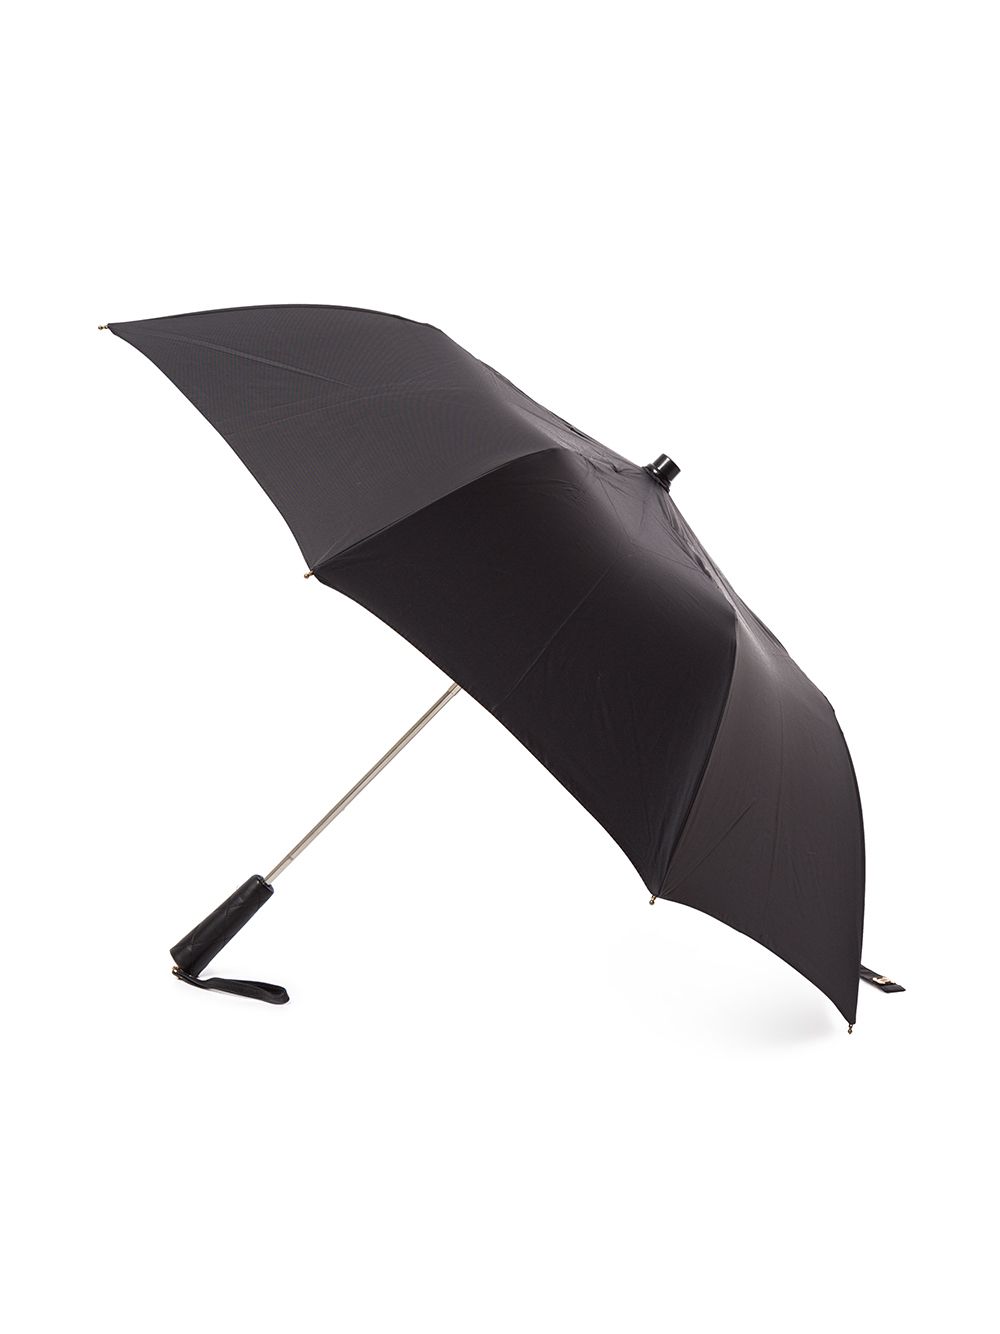 CHANEL Folding Umbrella with Case Black Gold Coco Mark Umbrella Parasol